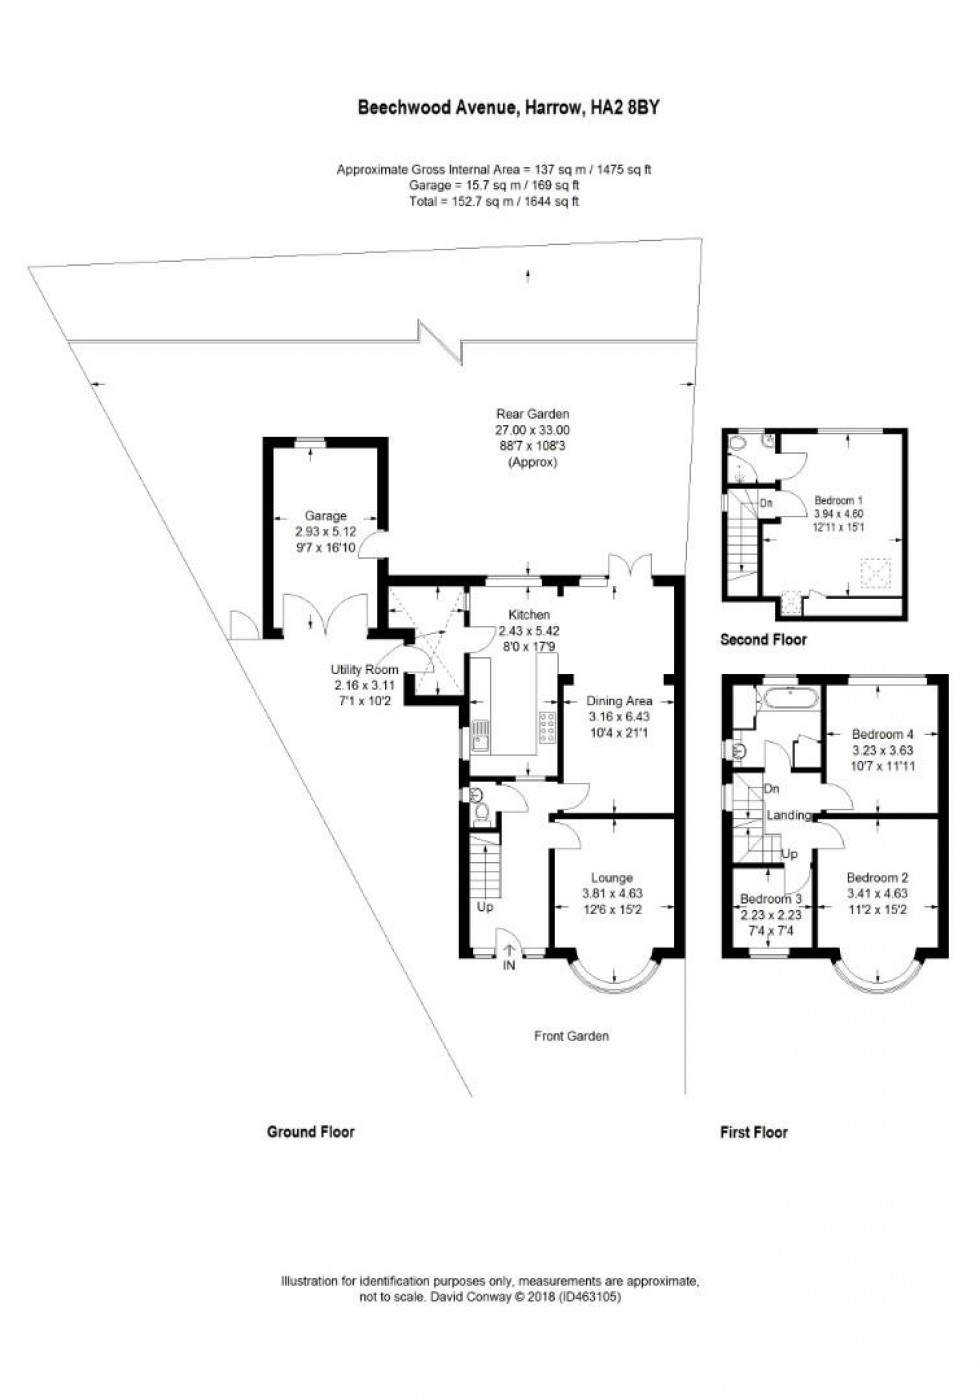 Floorplan for Beechwood Avenue, Harrow, HA2 8BY